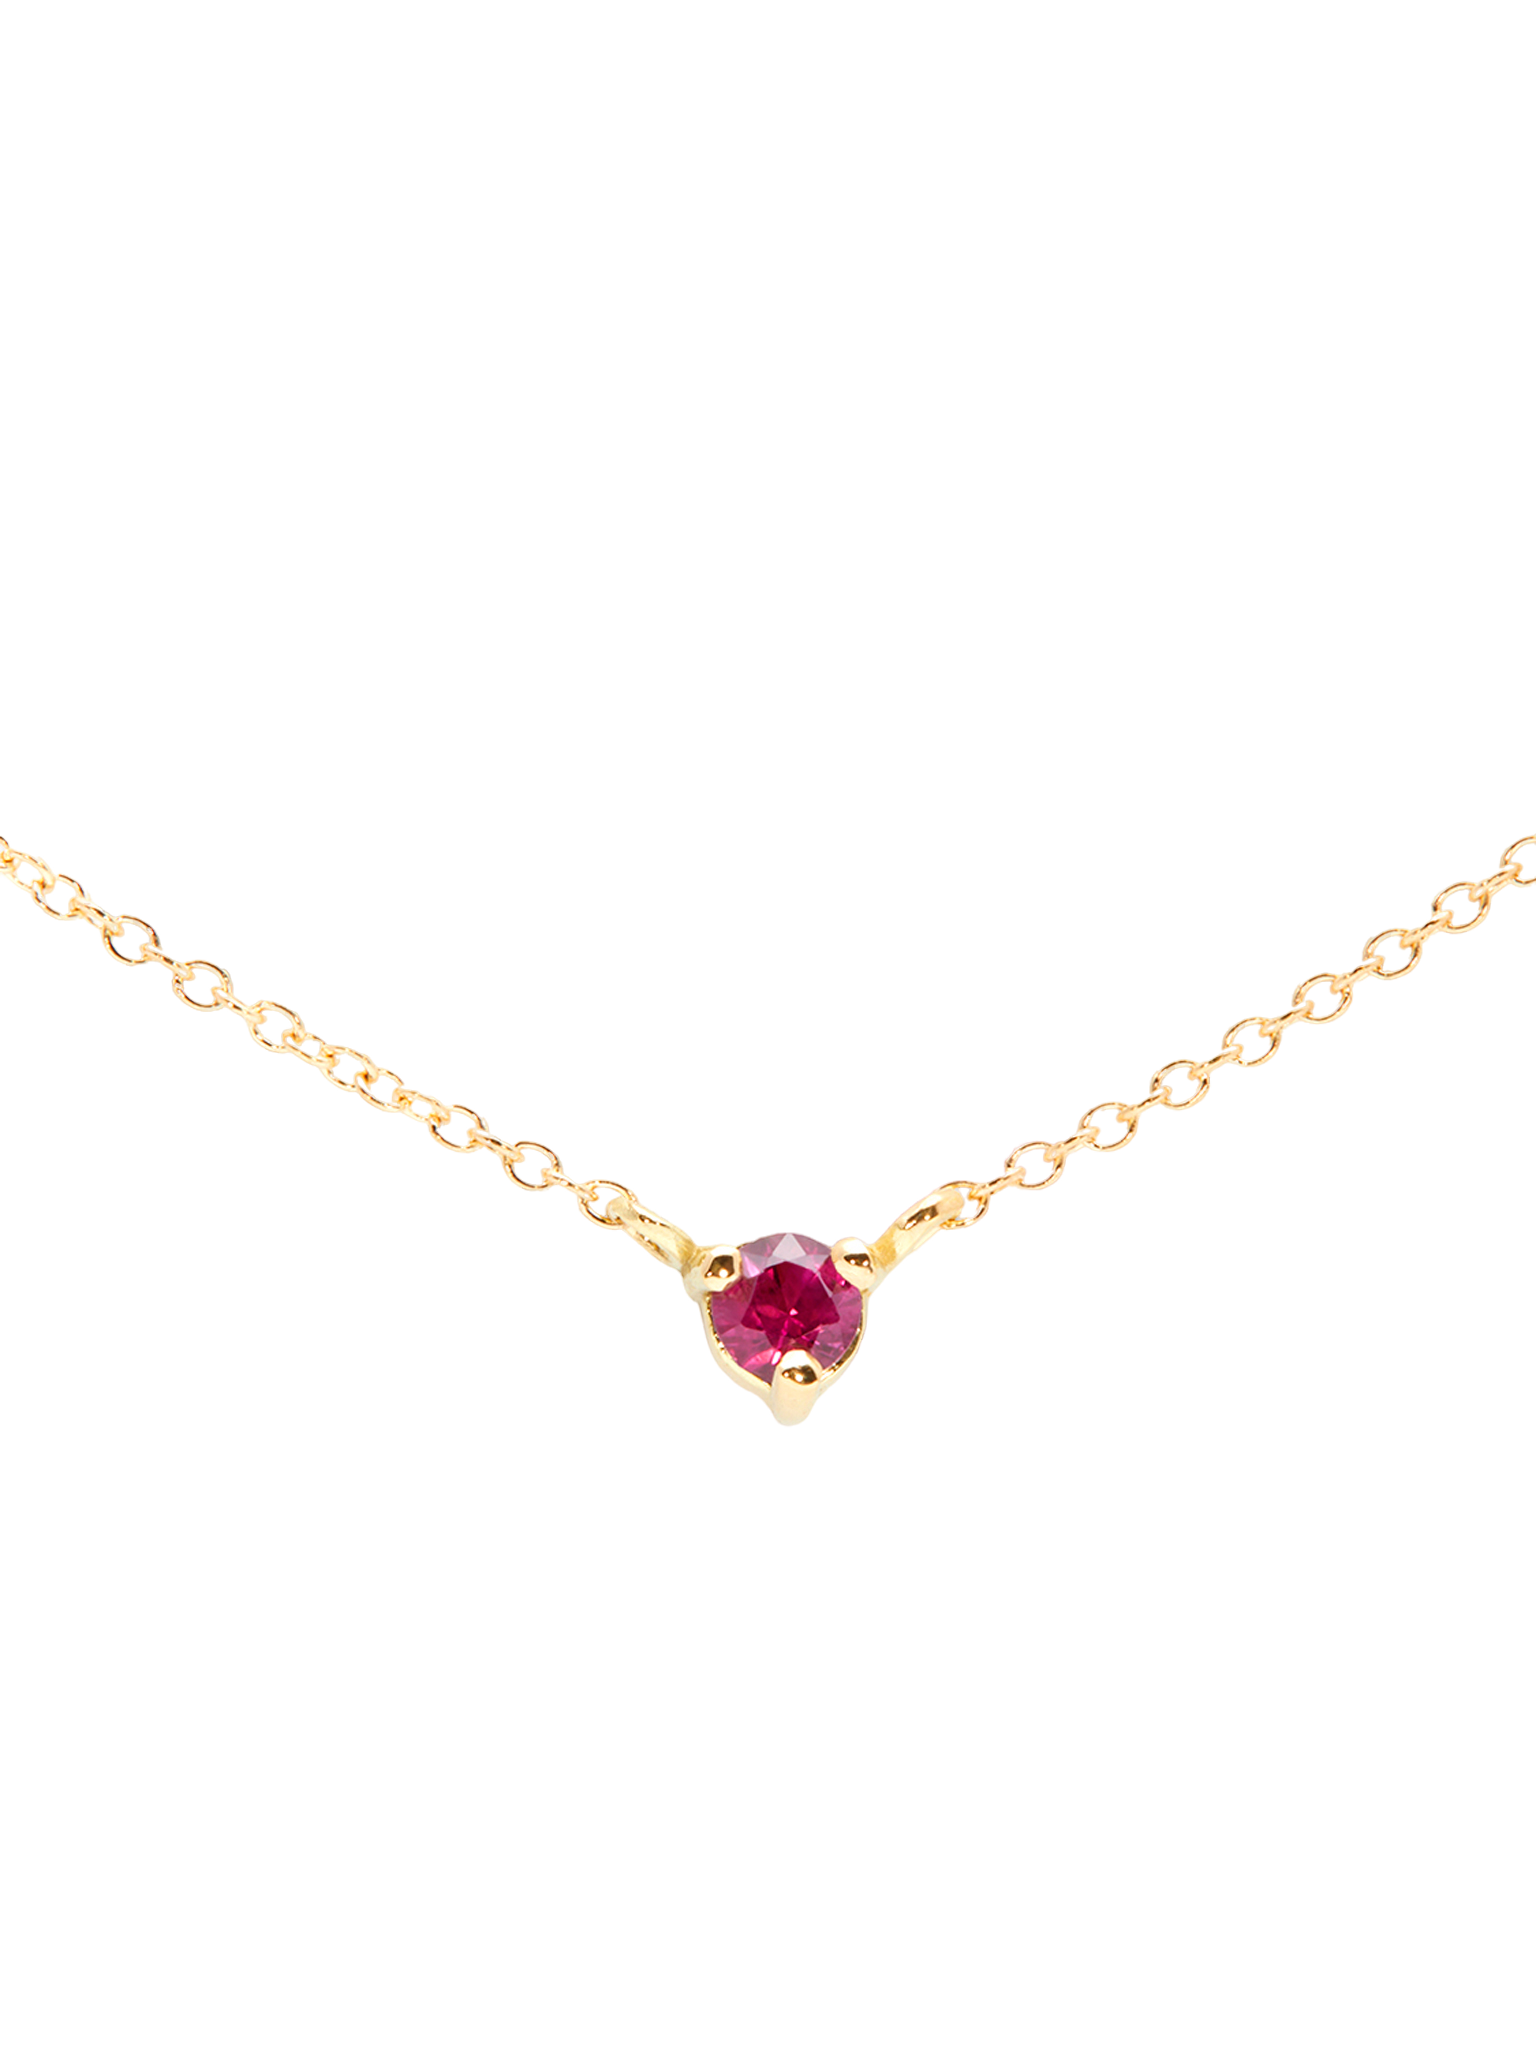 Birthstone ruby necklace